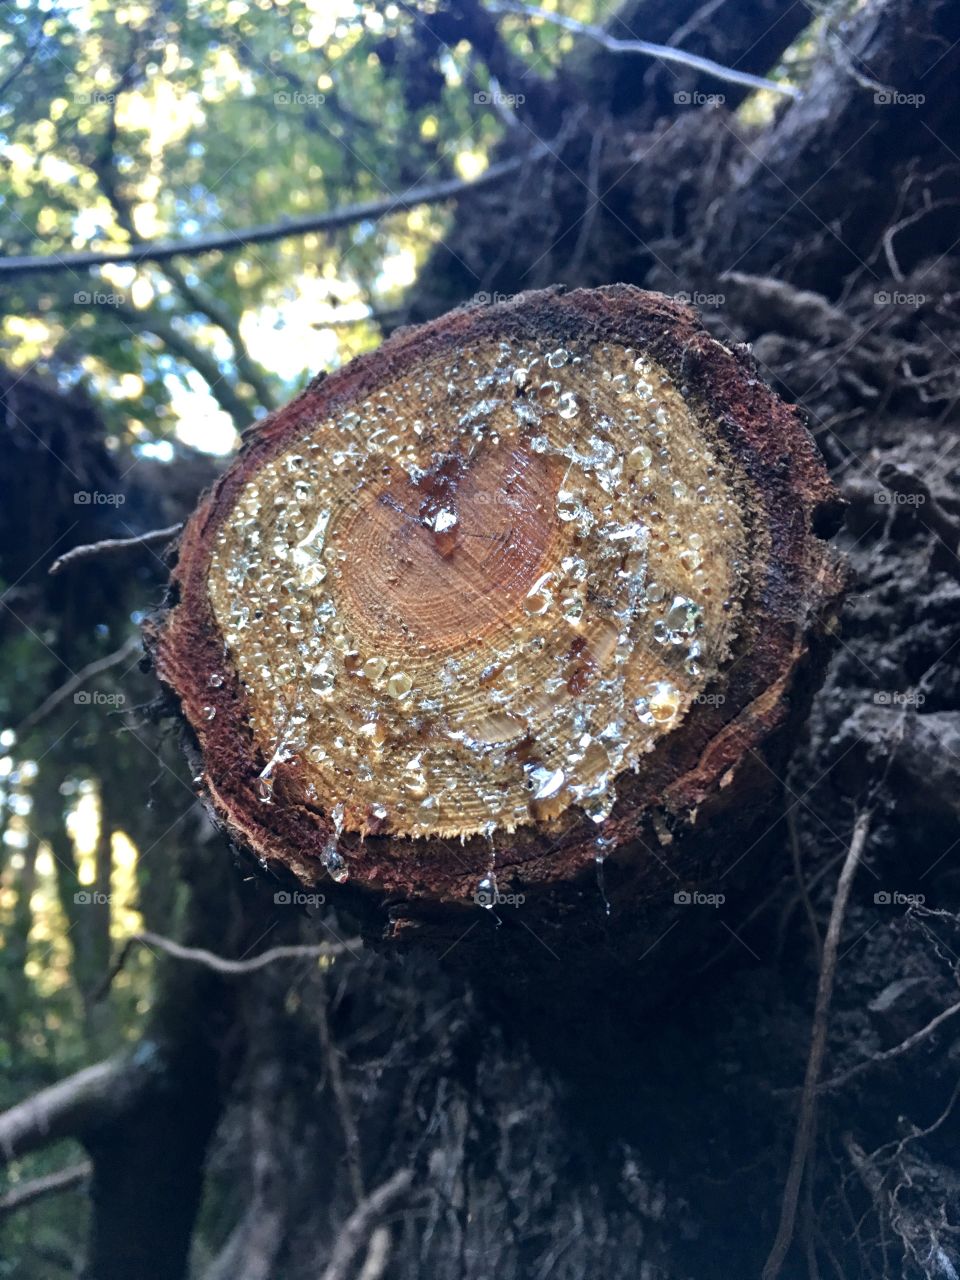 Freshly cut tree limb displaying drops of sap